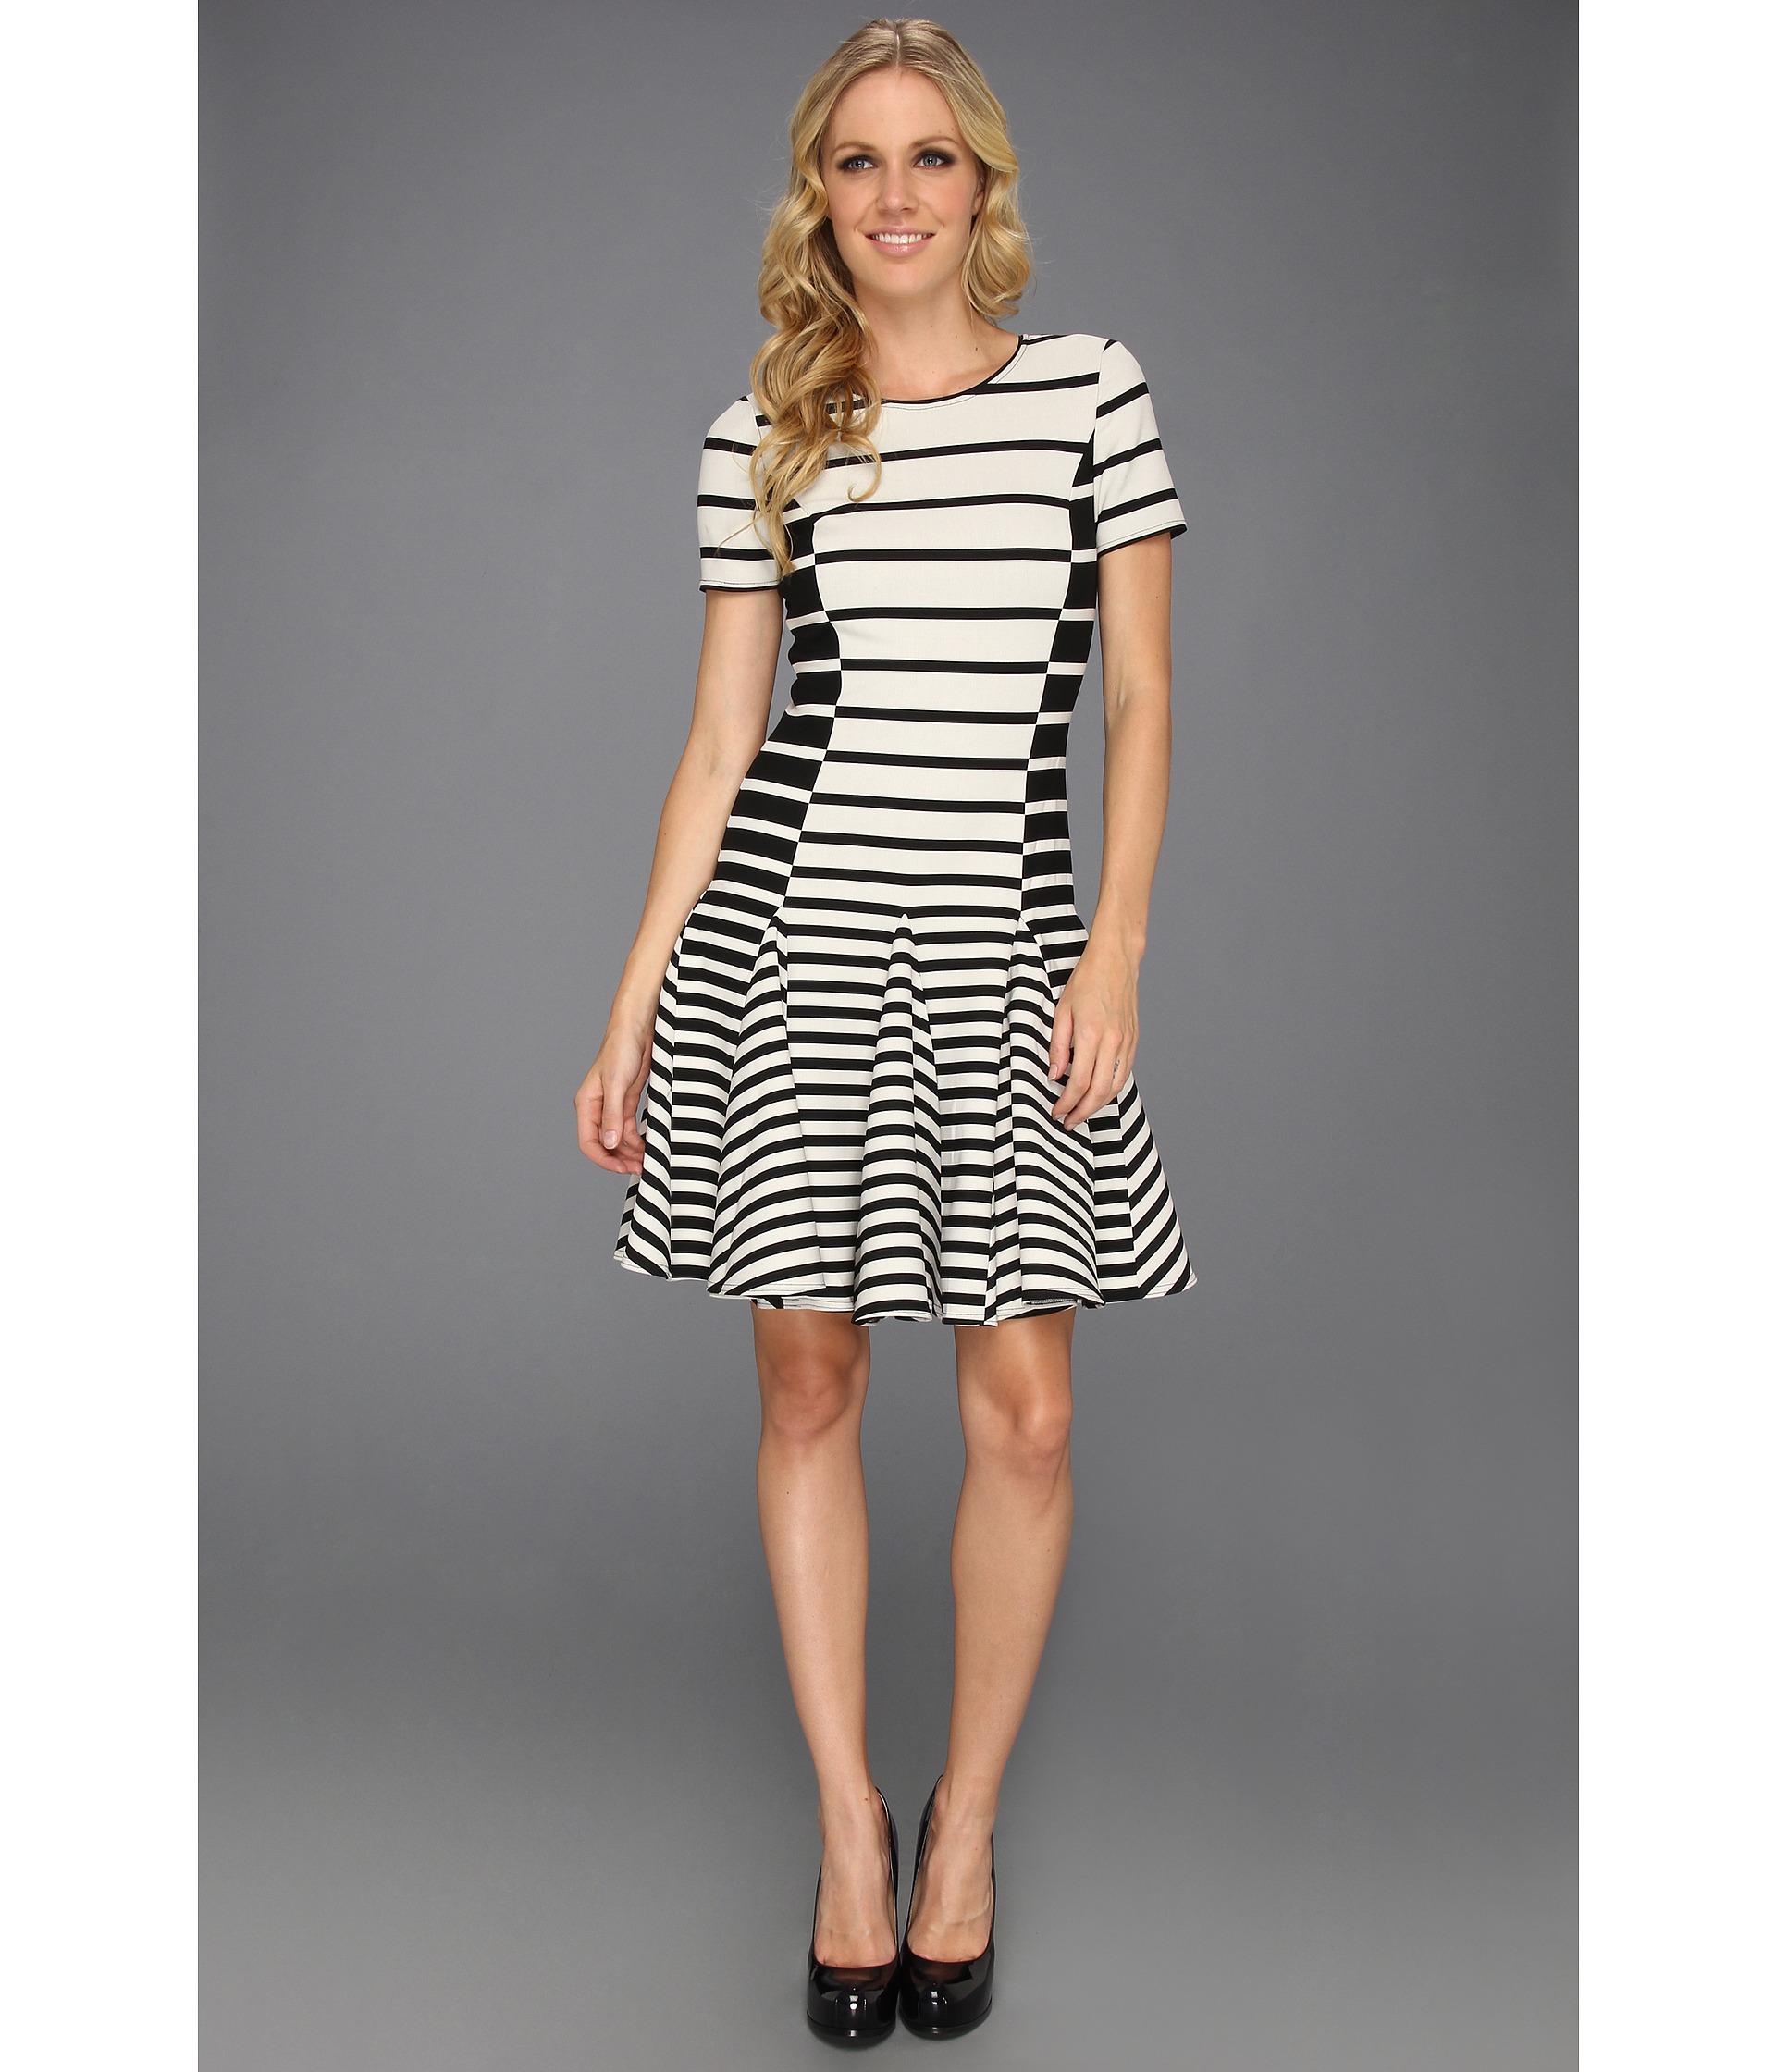 Halston Heritage Short Sleeve Stripe Dress w/ Flare Skirt